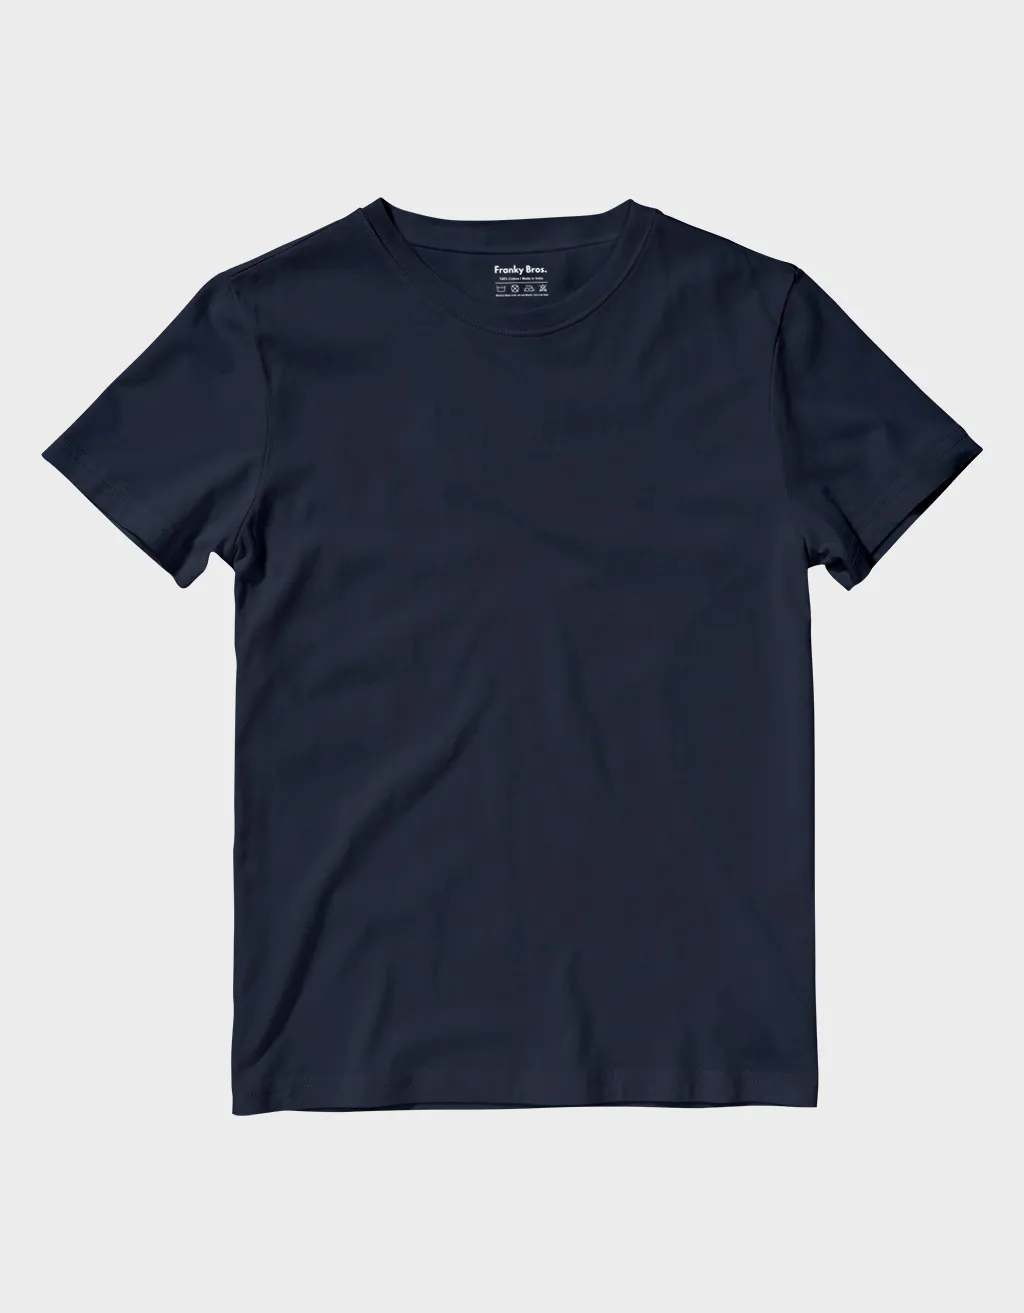 plain navy blue t shirt womens buy online